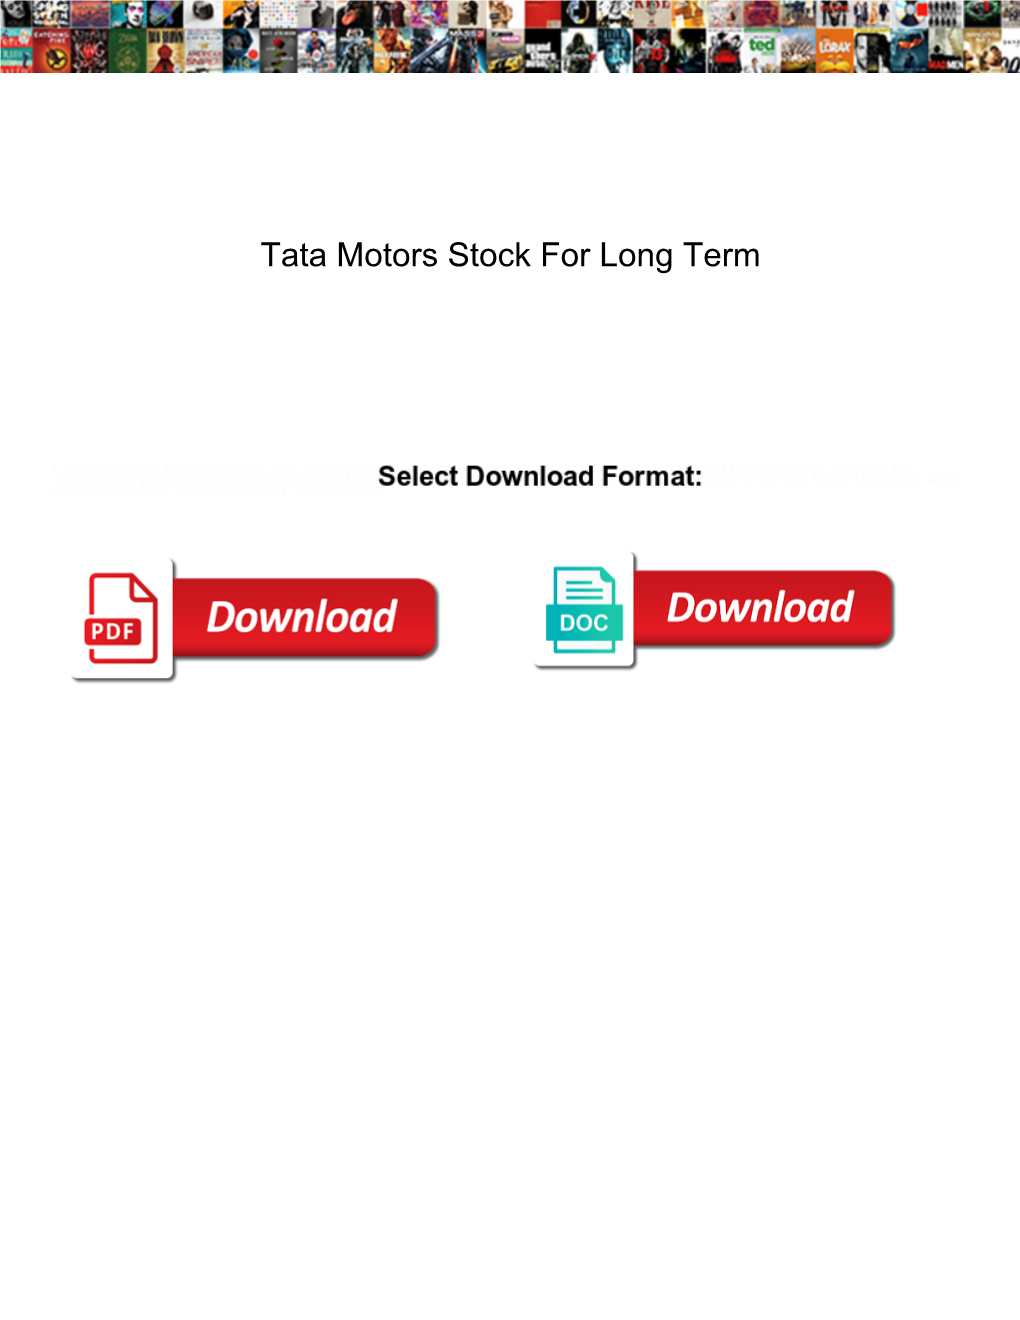 Tata Motors Stock for Long Term